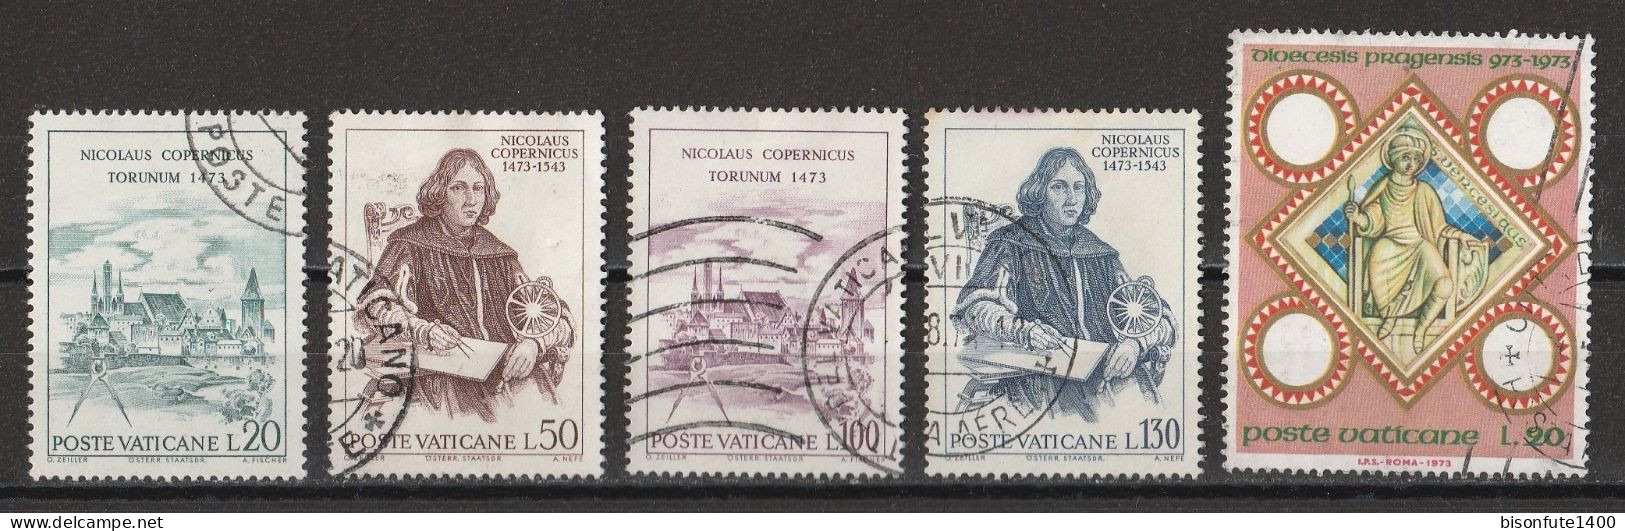 Vatican 1973 : Timbres Yvert & Tellier N° 552 - 553 - 554 - 555 - 556 - 557 - 558 - 559 - 560 - 561 - 562 - 563 - 564... - Gebraucht